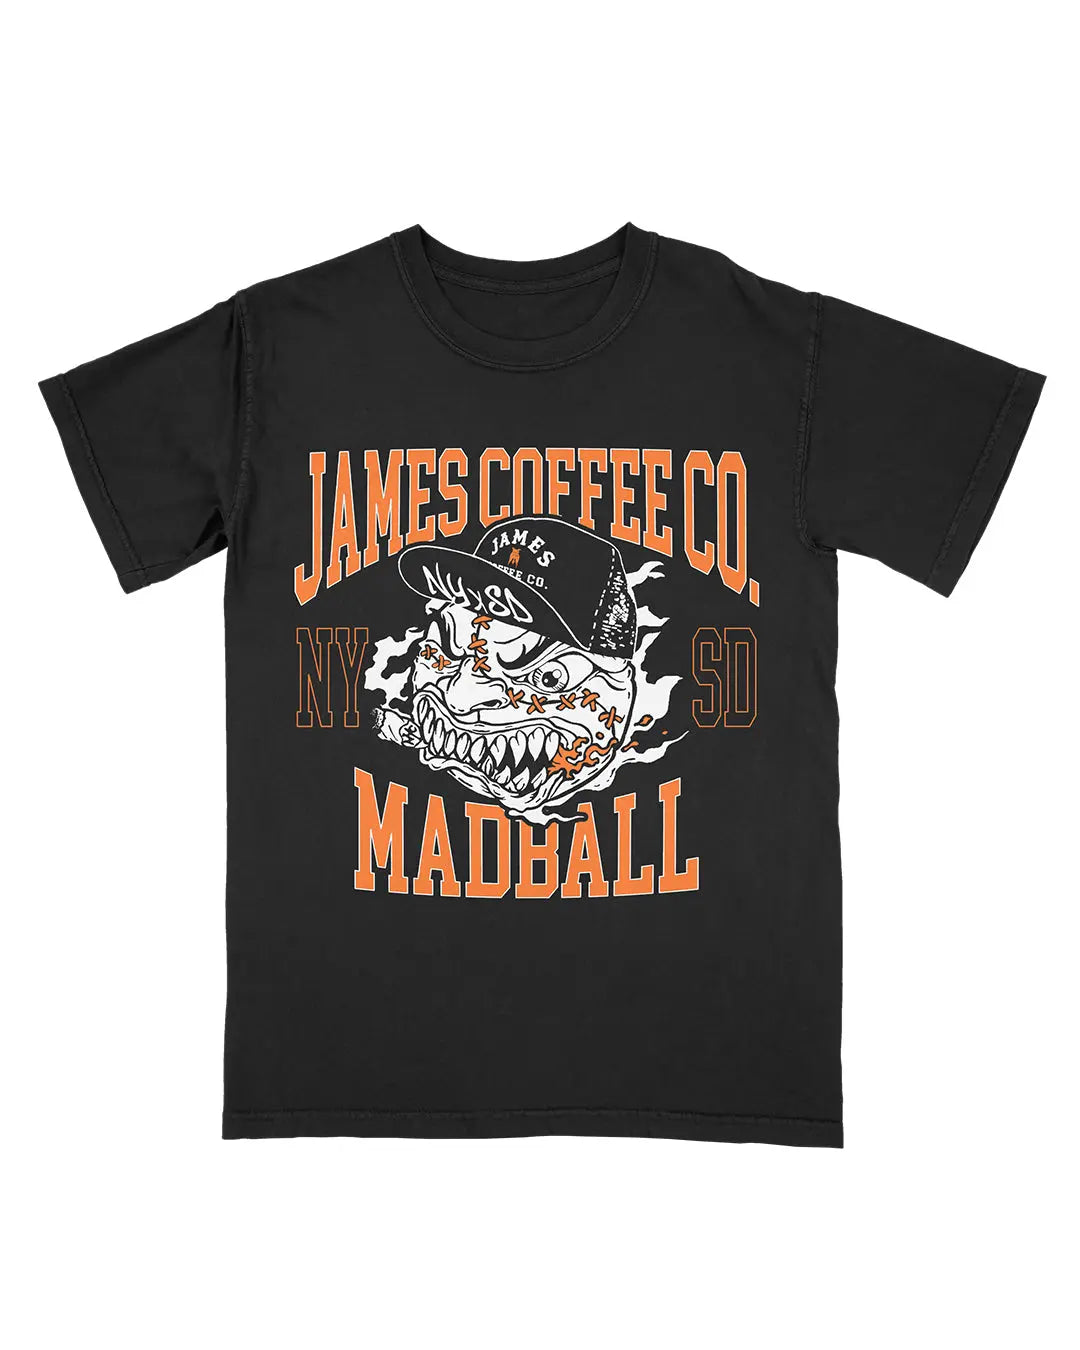 Madball x James Coffee Co. T-shirt James Coffee Co.